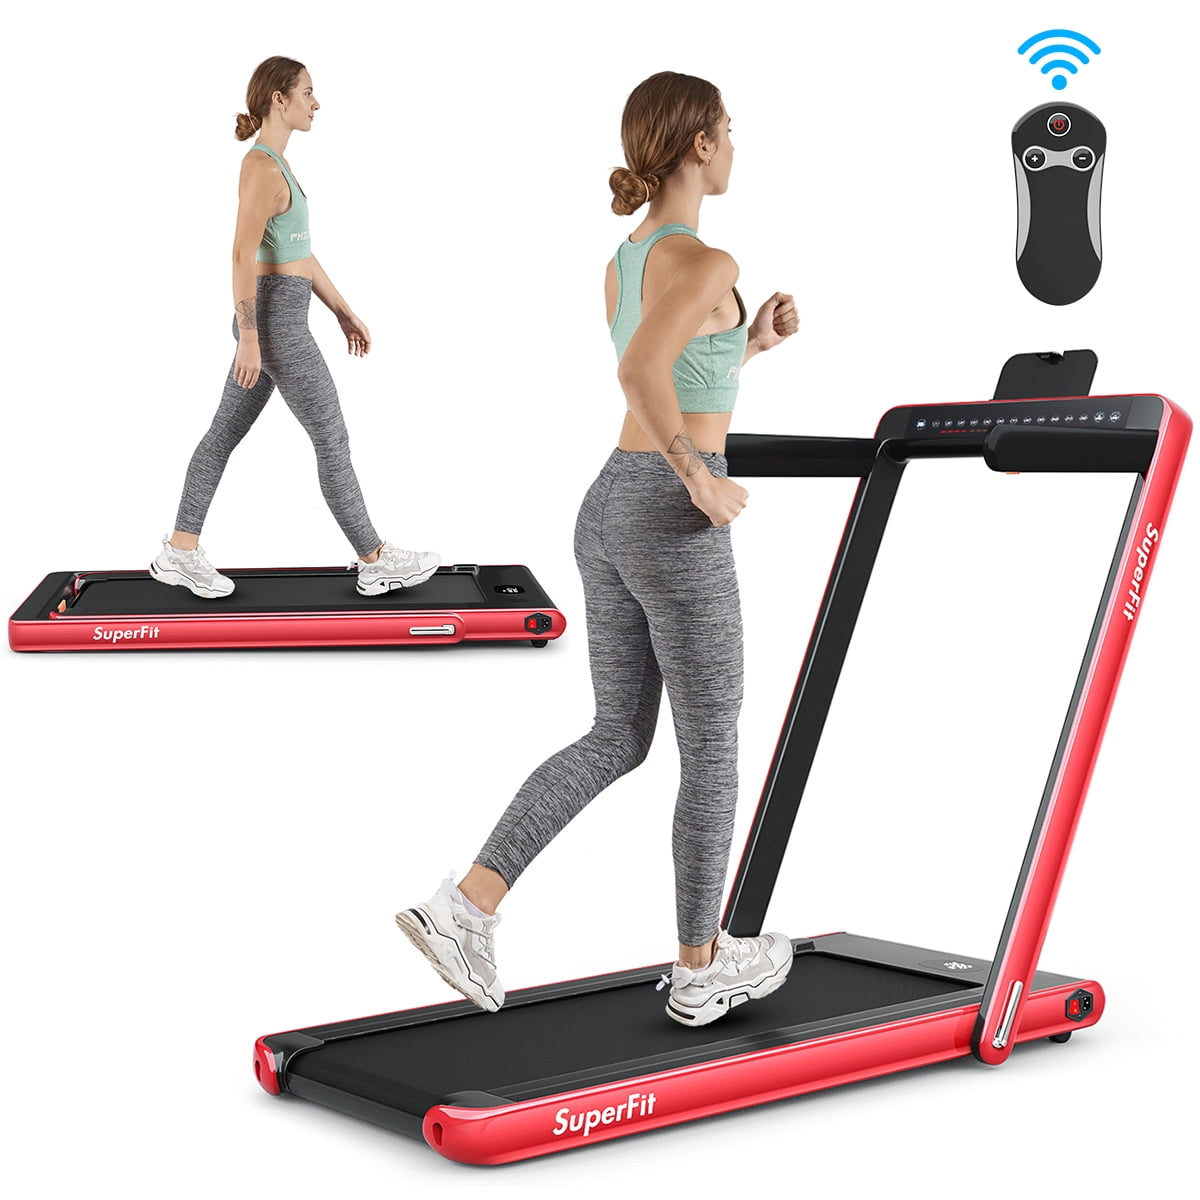 SuperFit 2.25HP in 1 Dual Display Treadmill Jogging Machine Control Dual Display Screen Silver - Walmart.com